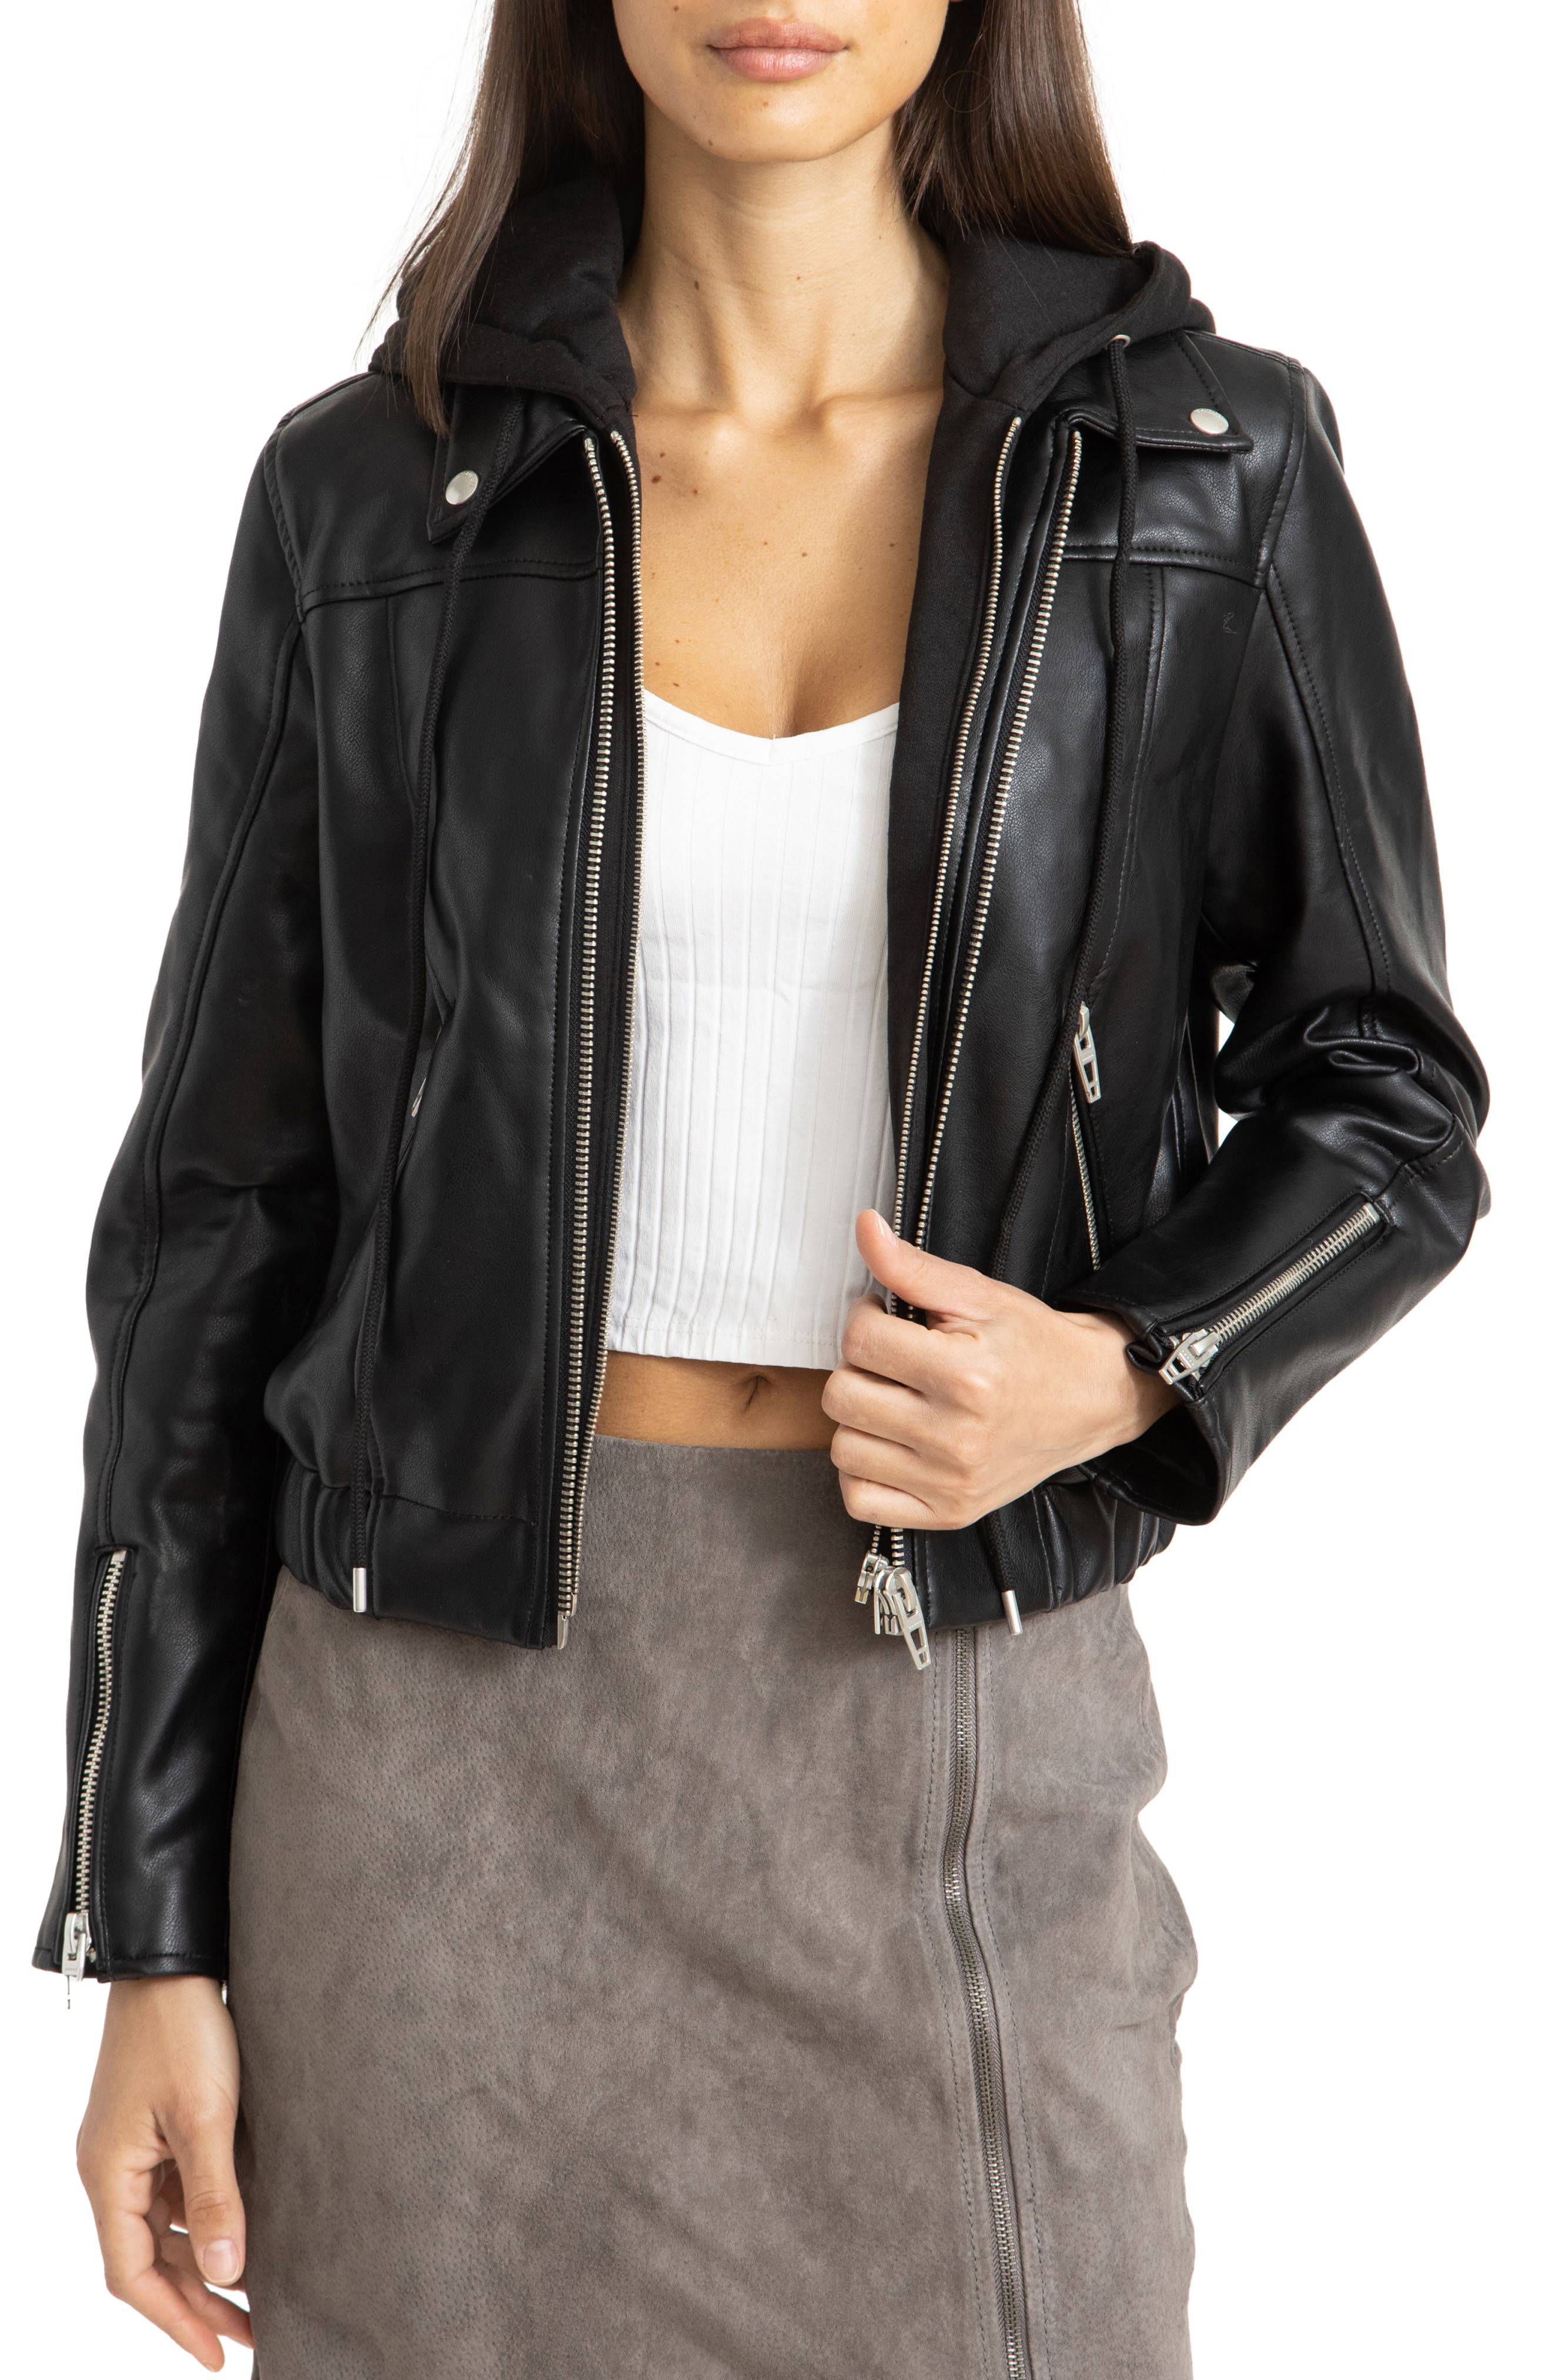 Size Koucla Women's Khaki & Black Trendy Bomber Jacket Coat